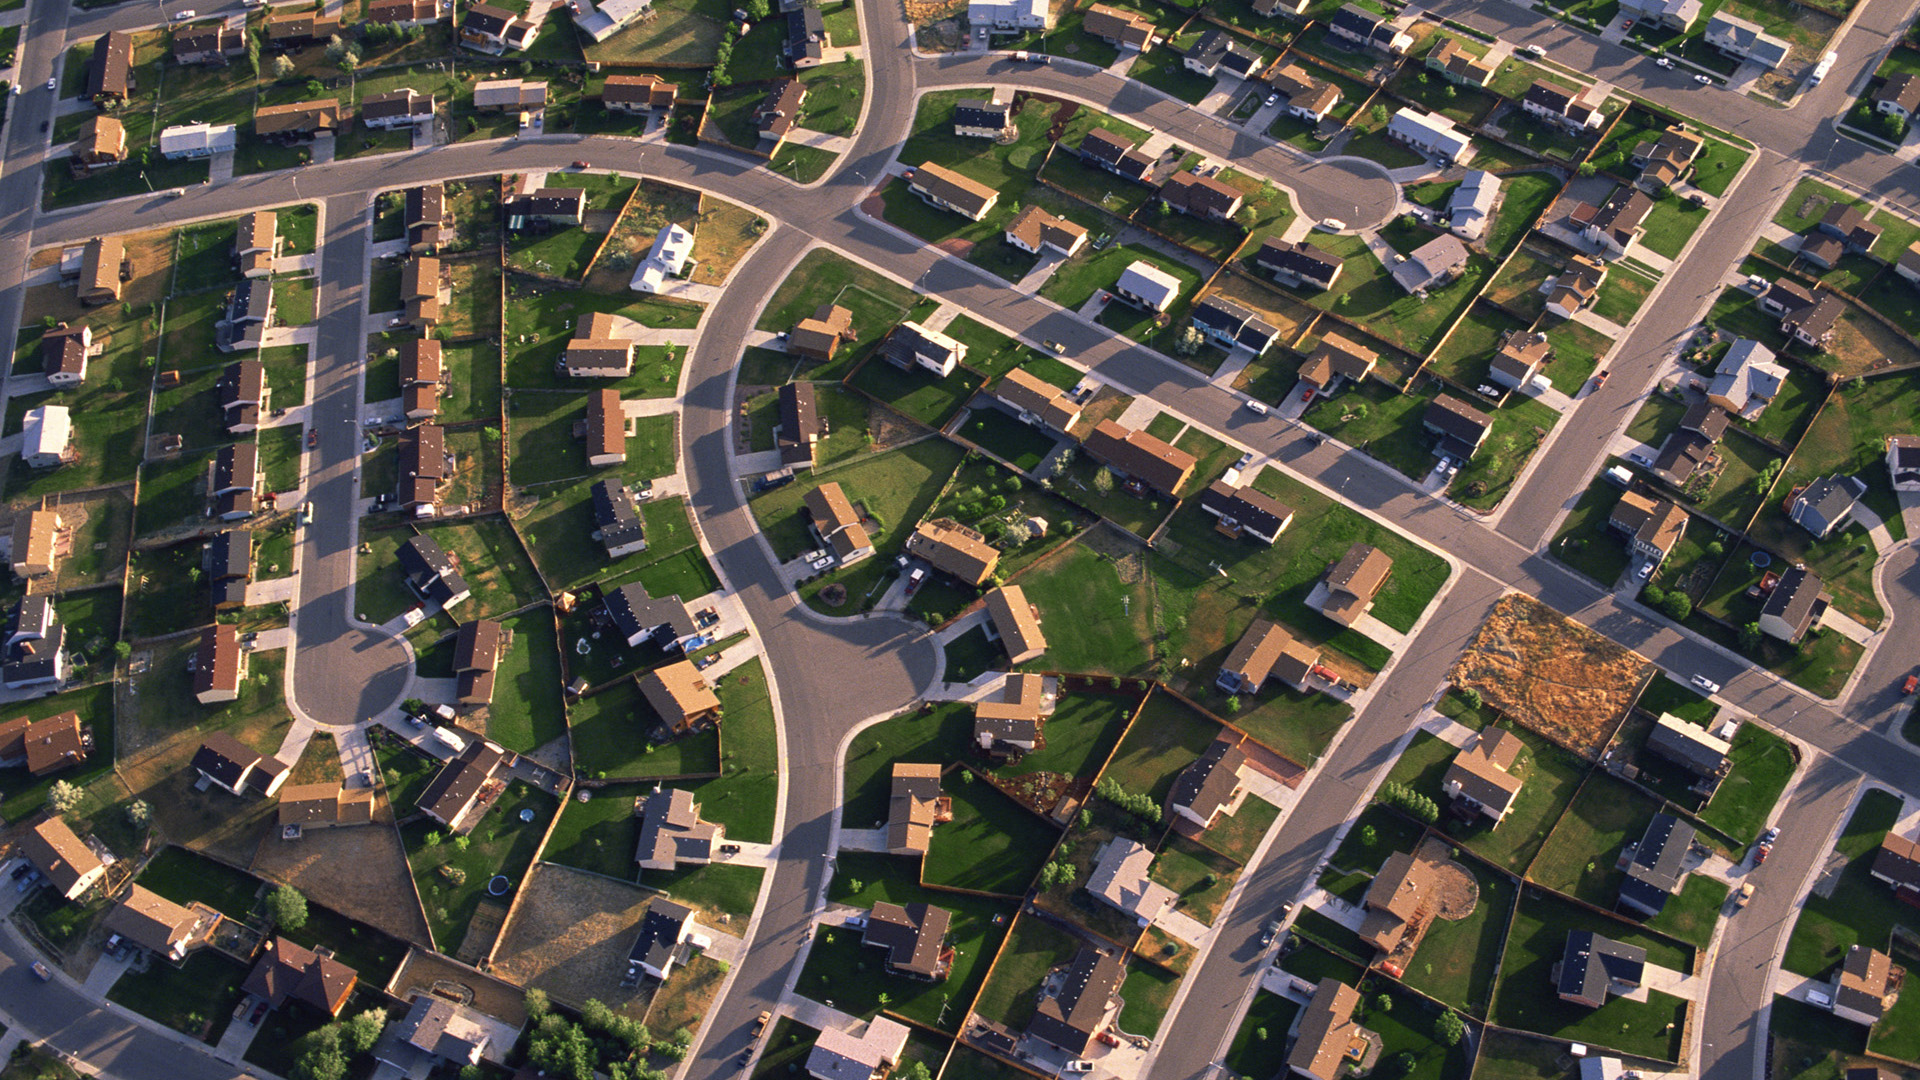 Aerial image of Billings housing development, key image